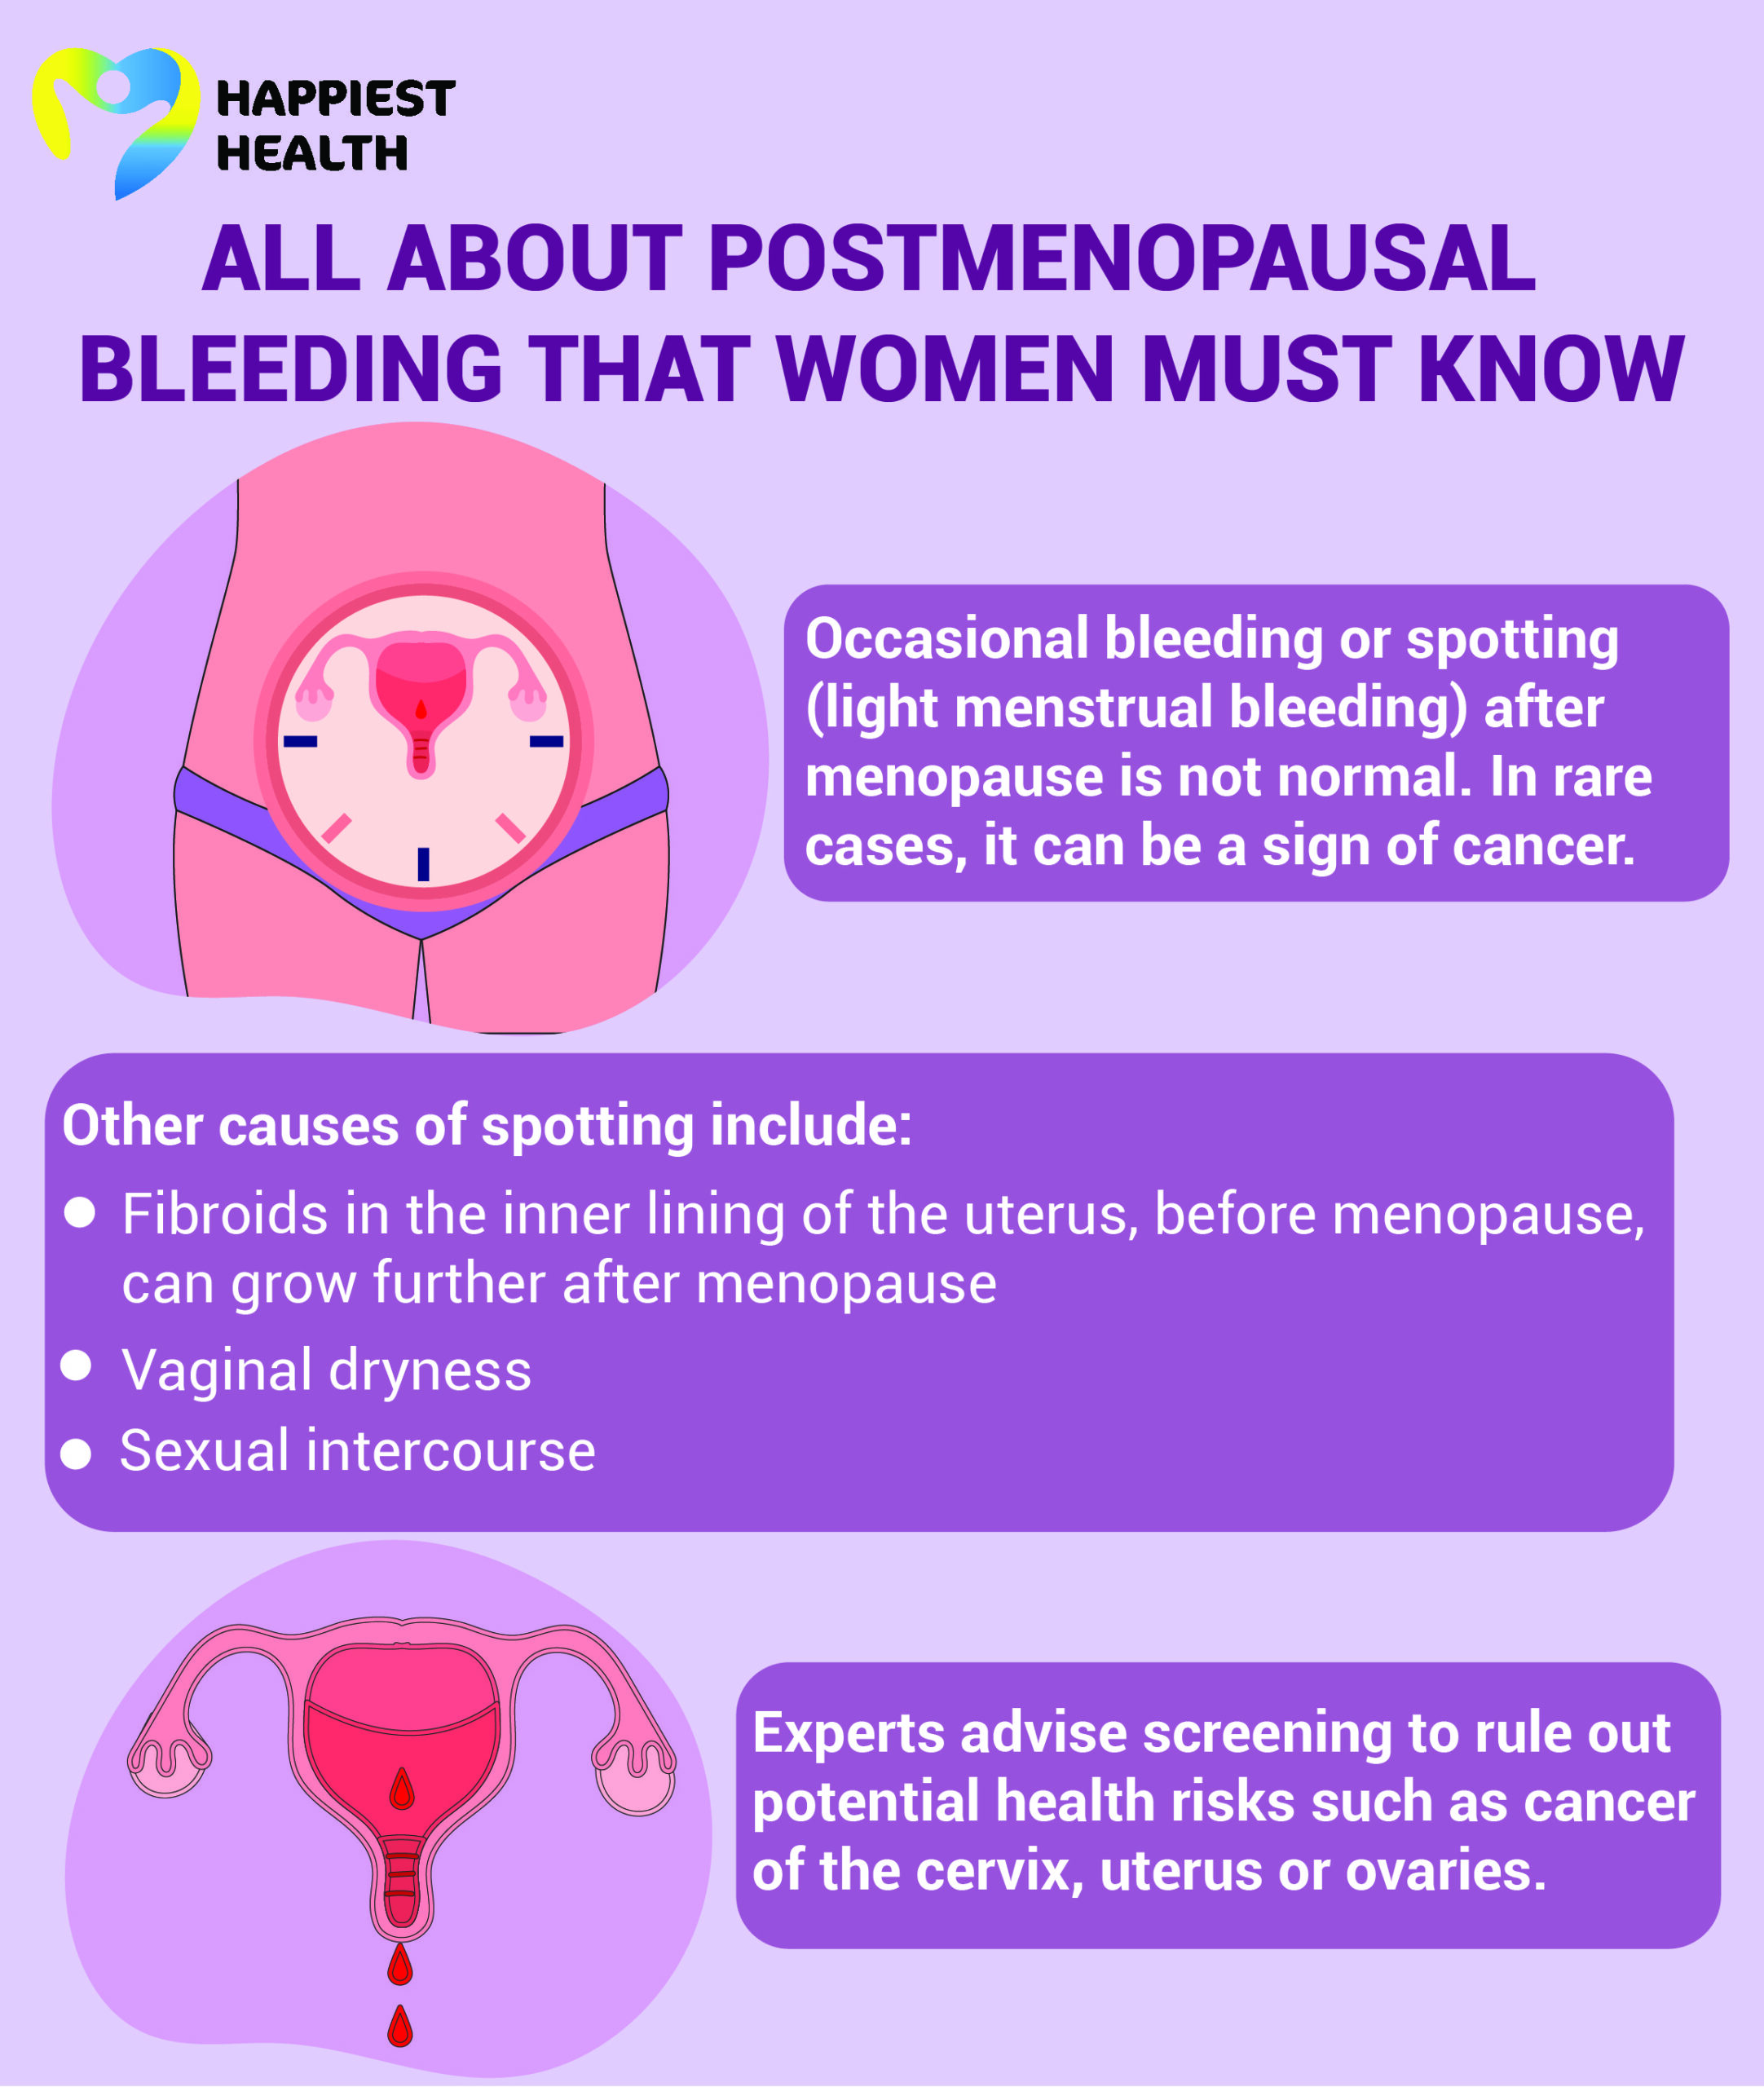 All about postmenopausal bleeding